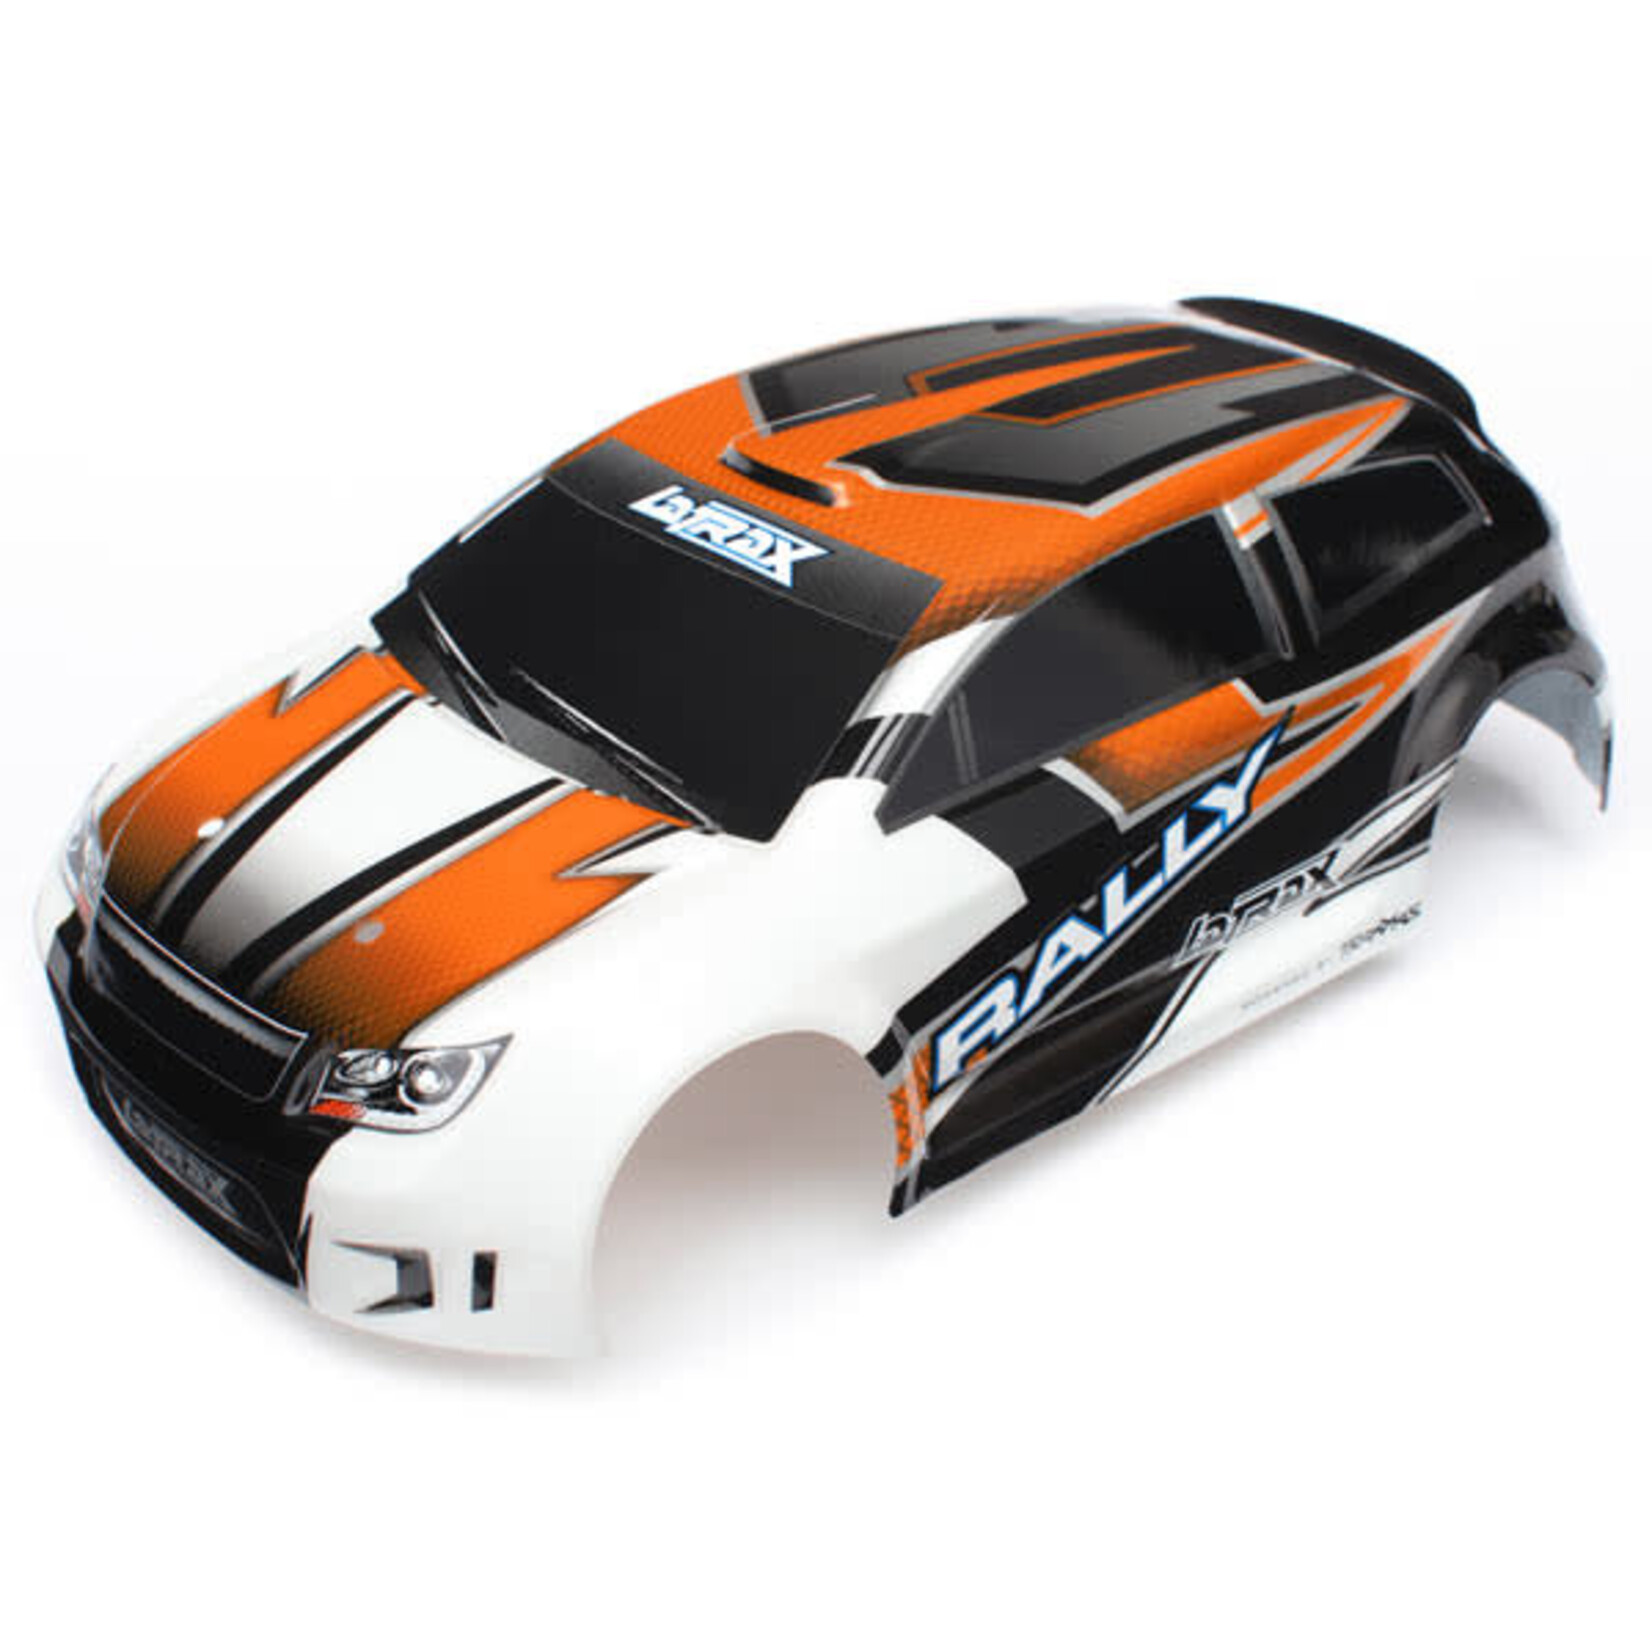 LaTrax Traxxas LaTrax 1/18 Rally Body (Orange) #7517